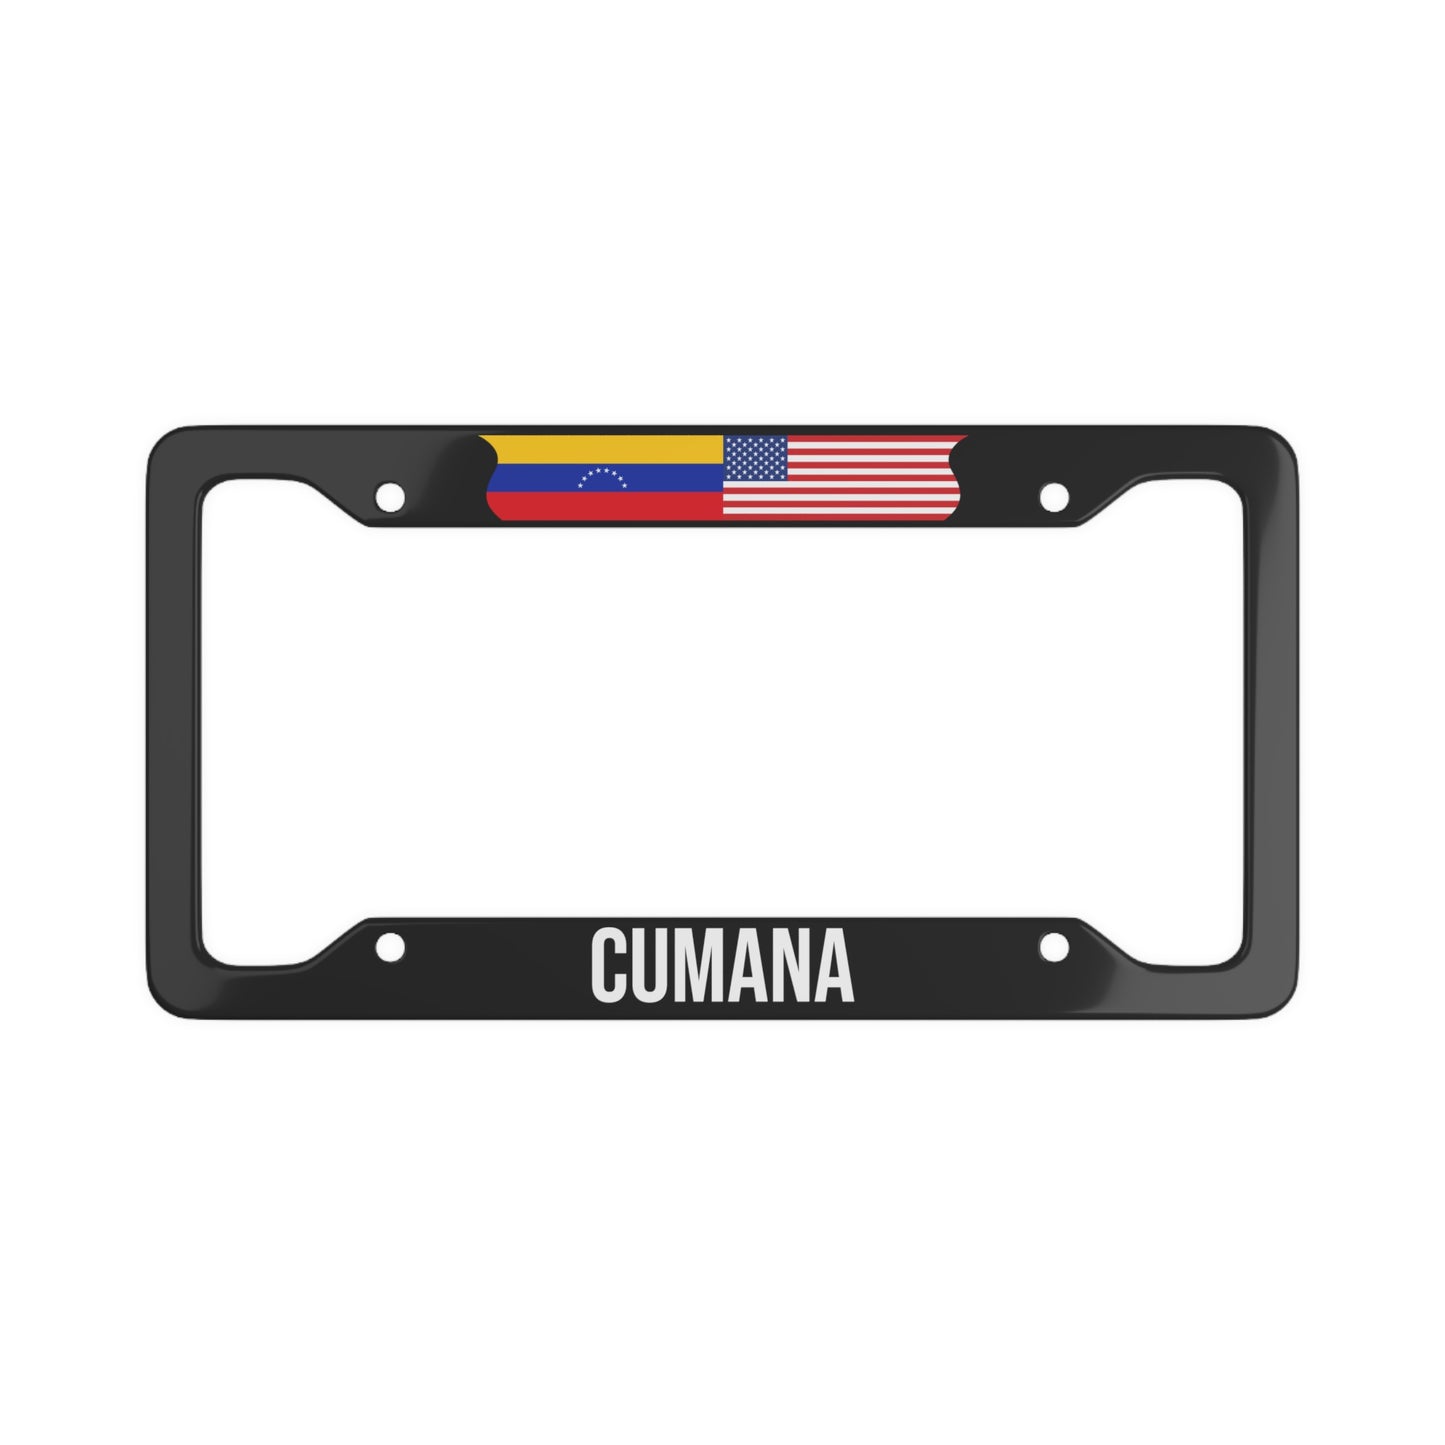 Cumana, Venezuela Car Plate Frame